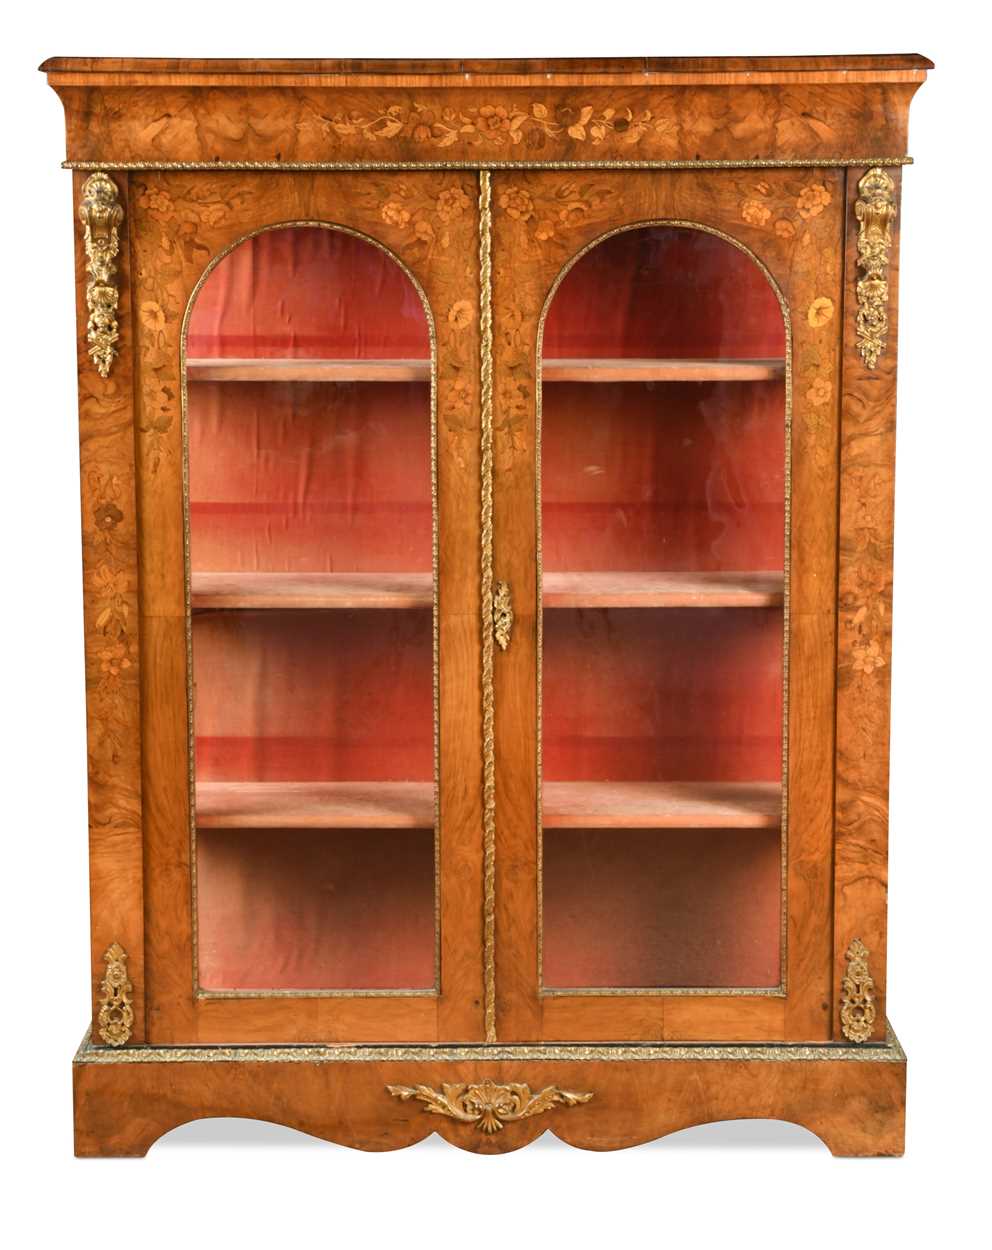 An inlaid walnut and gilt metal display cabinet, 19th century,